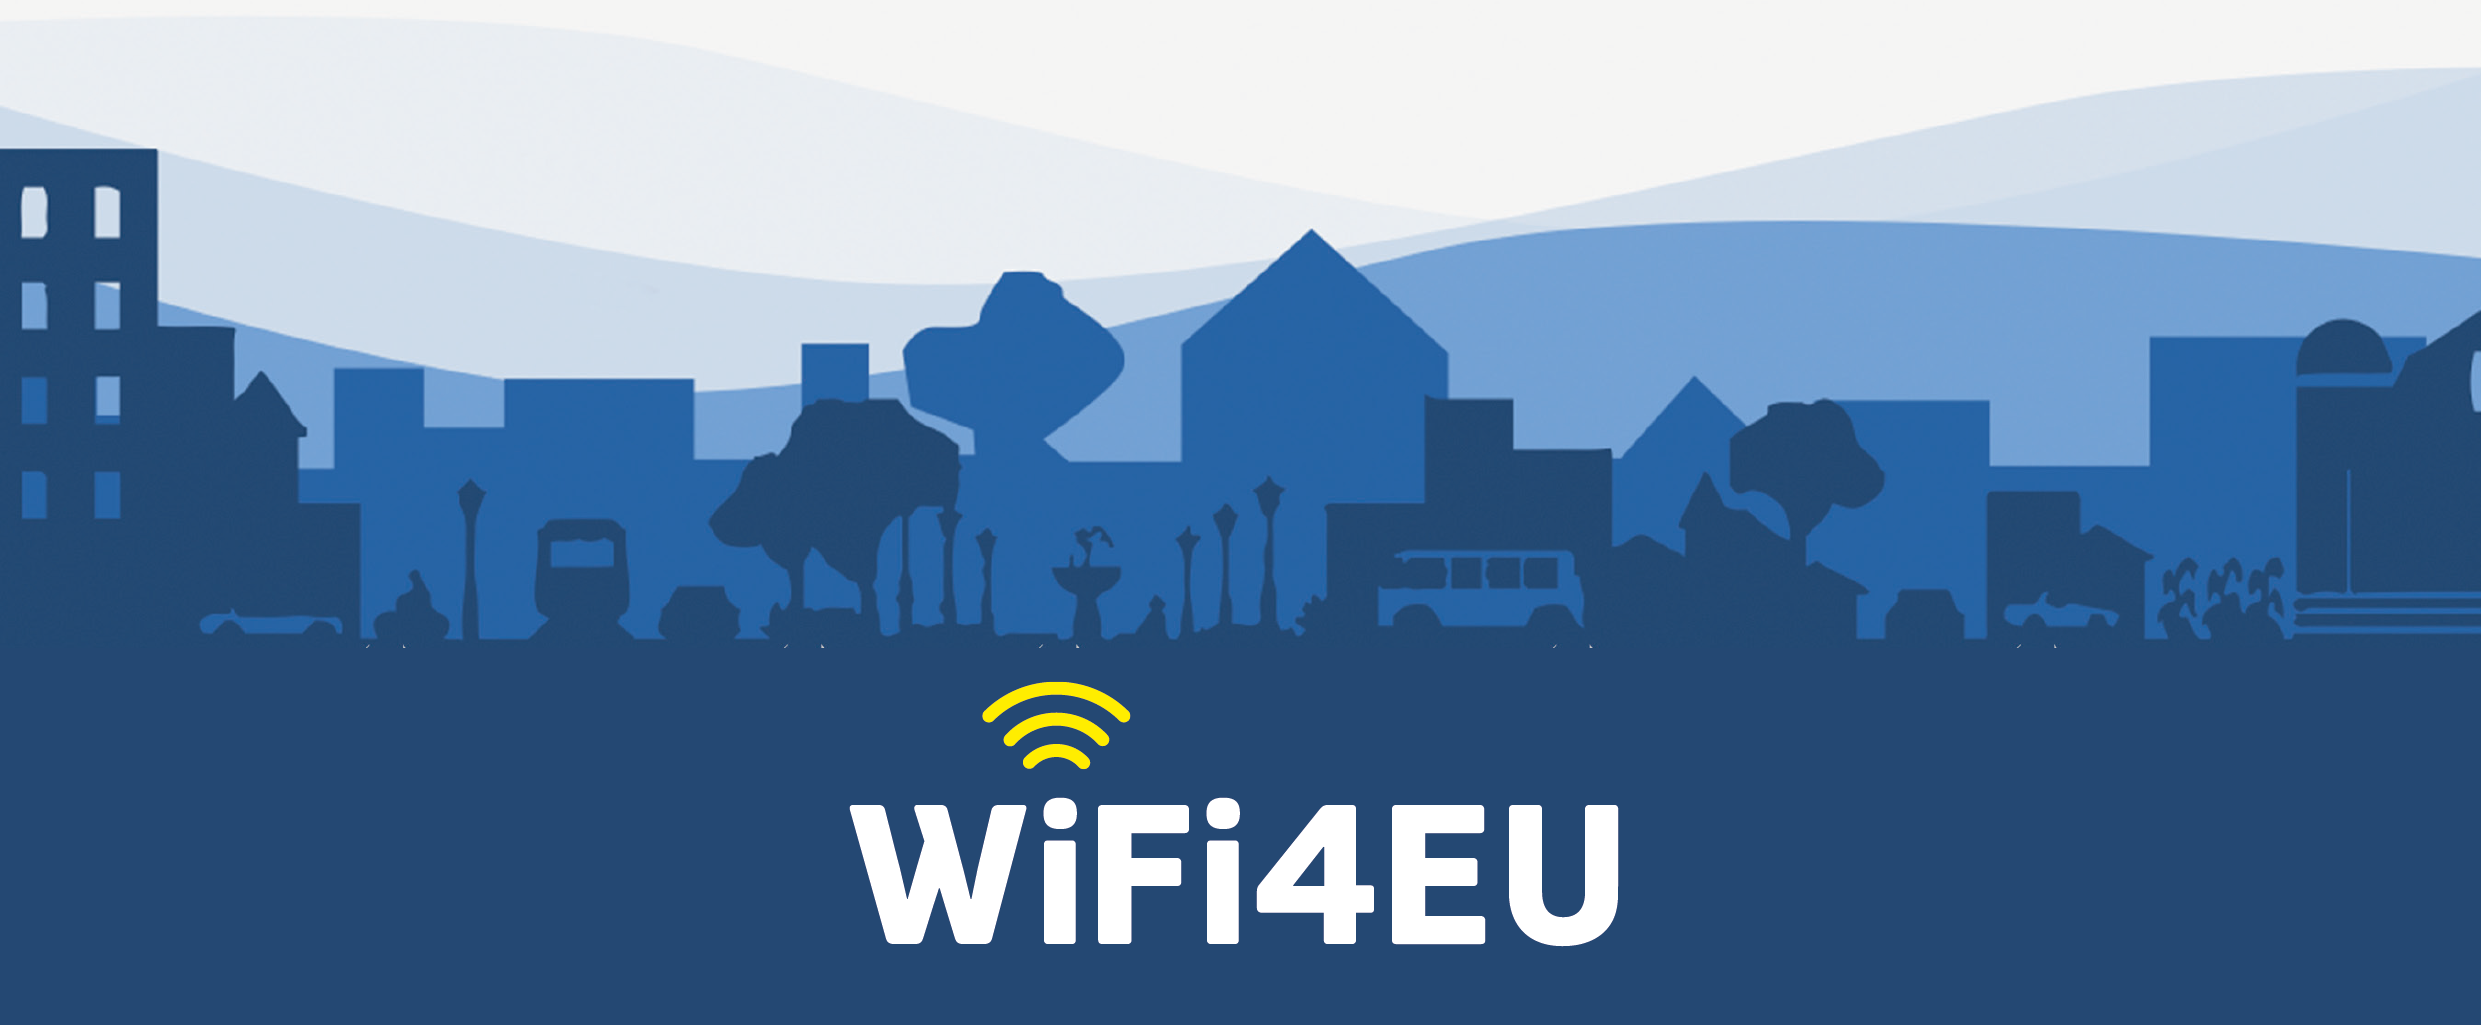 More information about "Δωρεάν WiFi σε 70 δήμους στην Ελλάδα – Επιδότηση 15.000 από την ΕΕ"